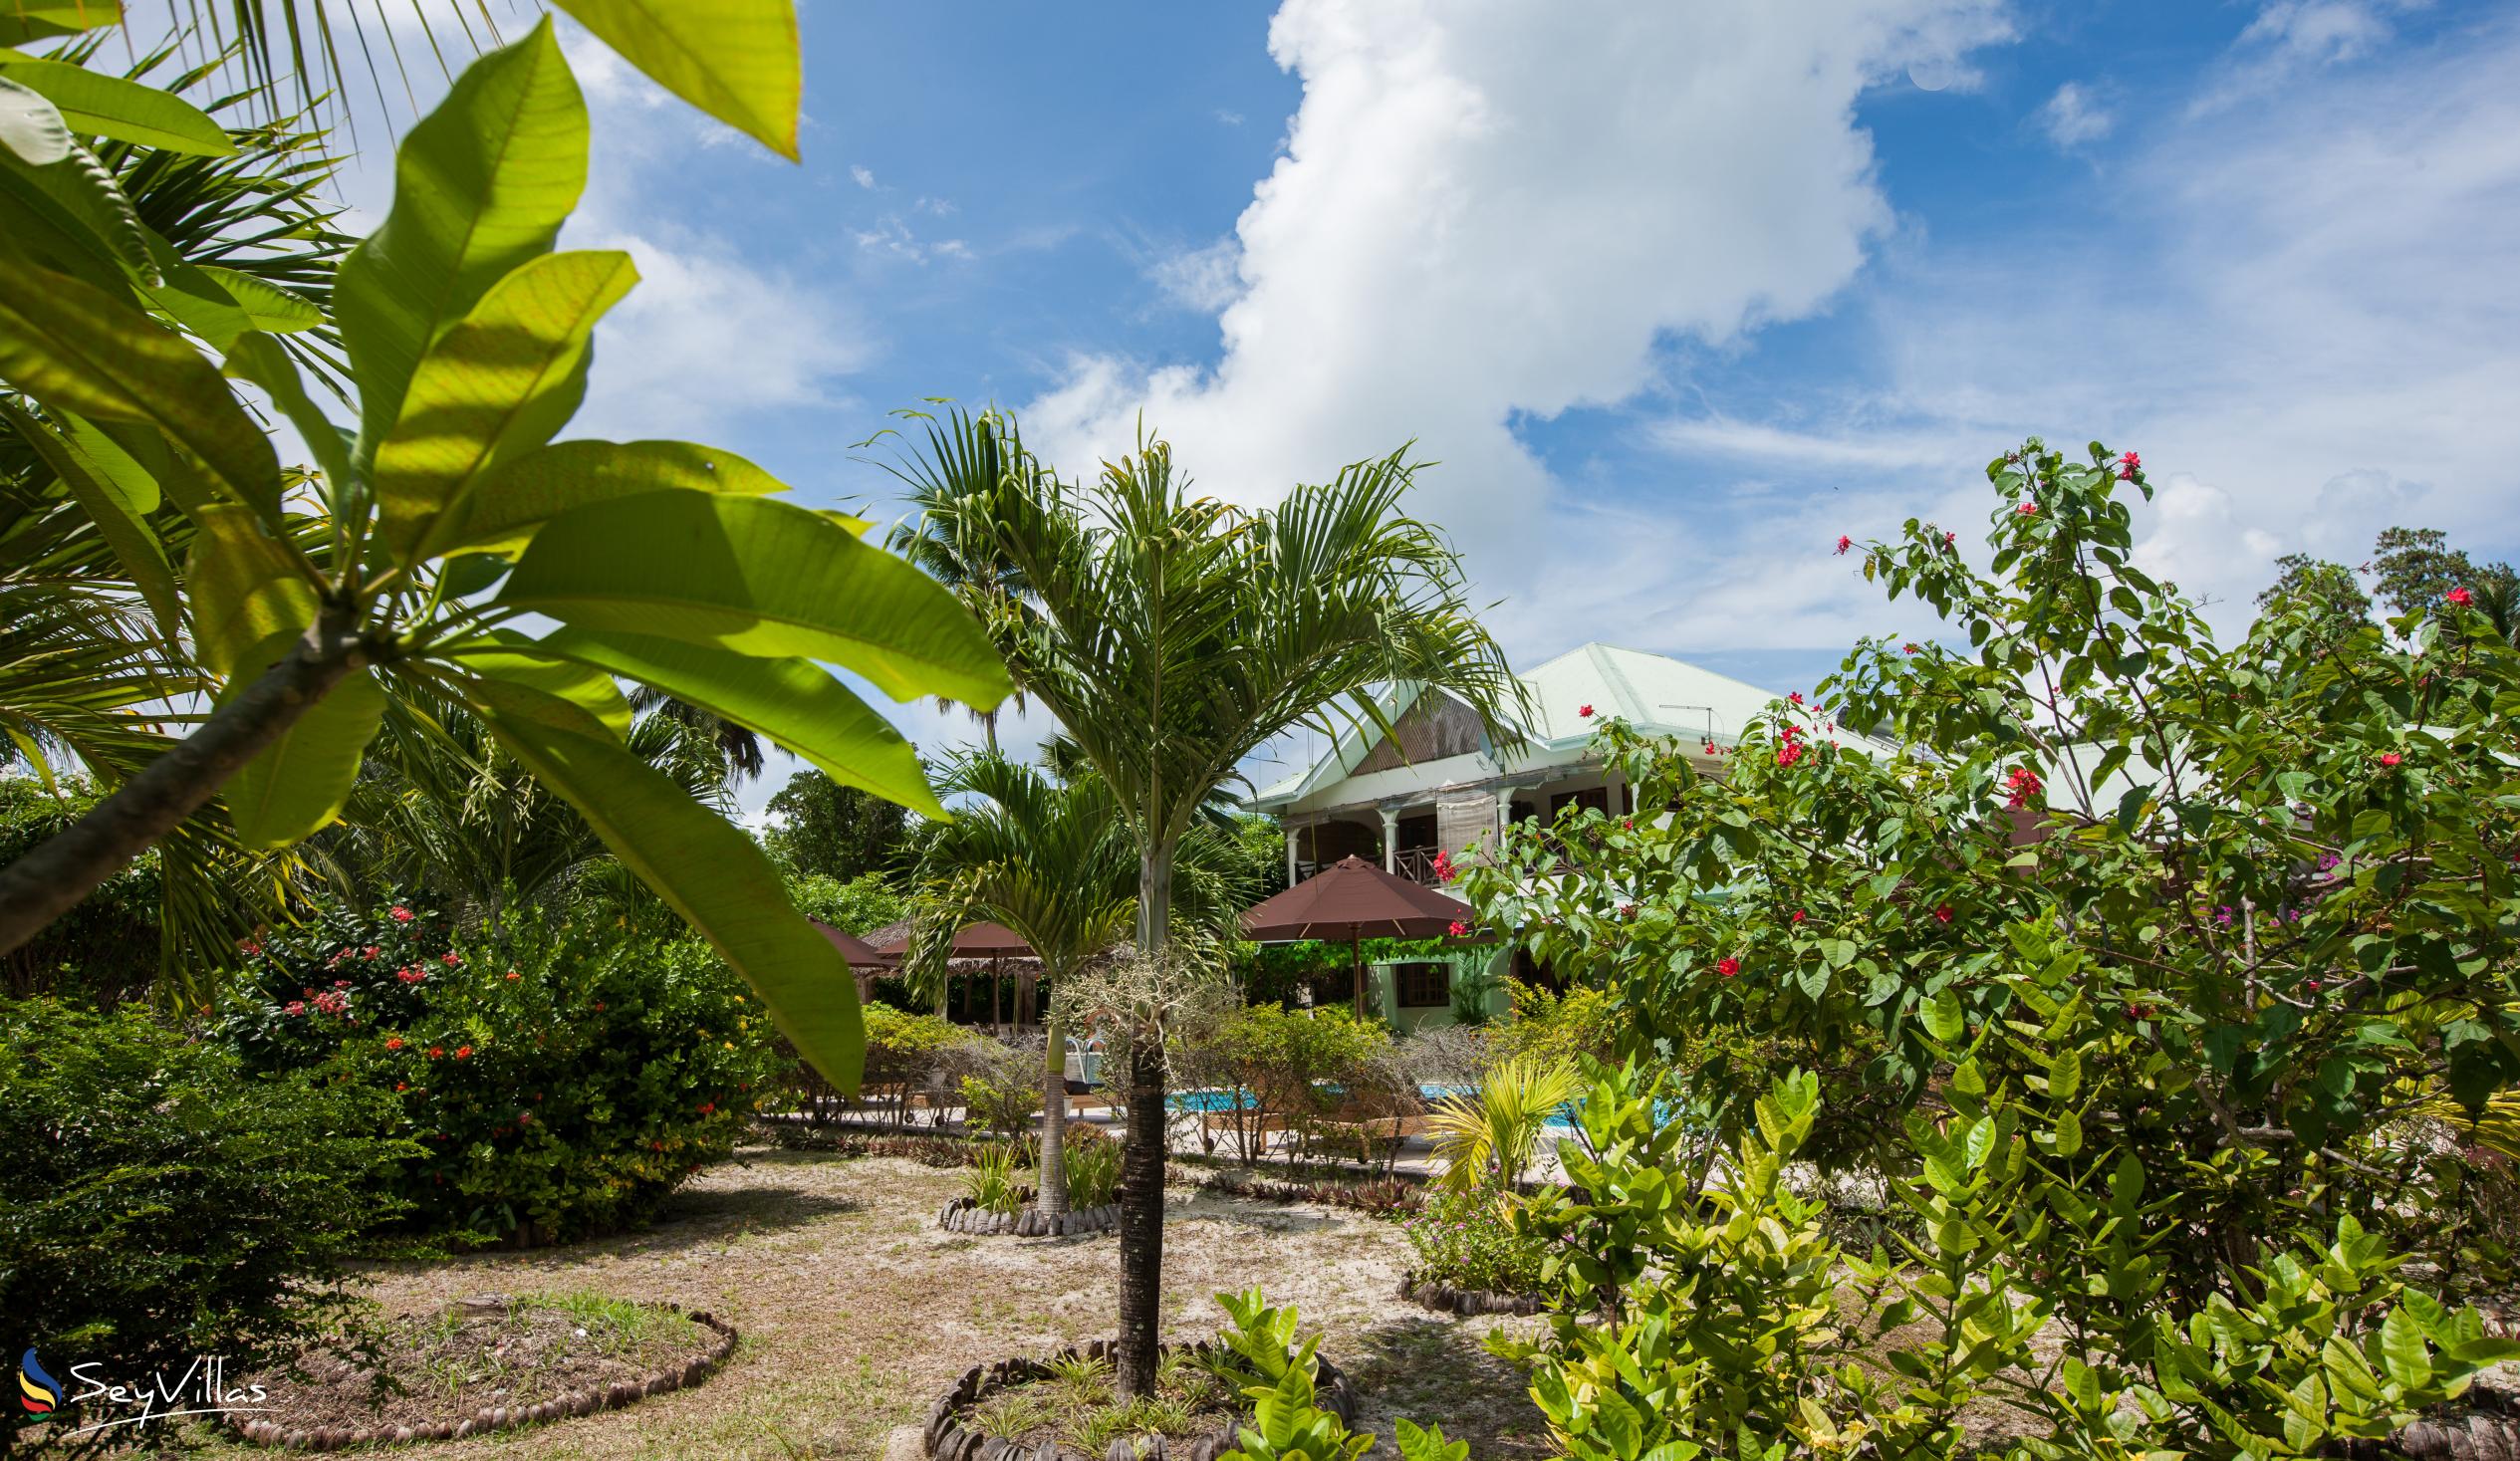 Photo 12: Villa de Cerf - Outdoor area - Cerf Island (Seychelles)